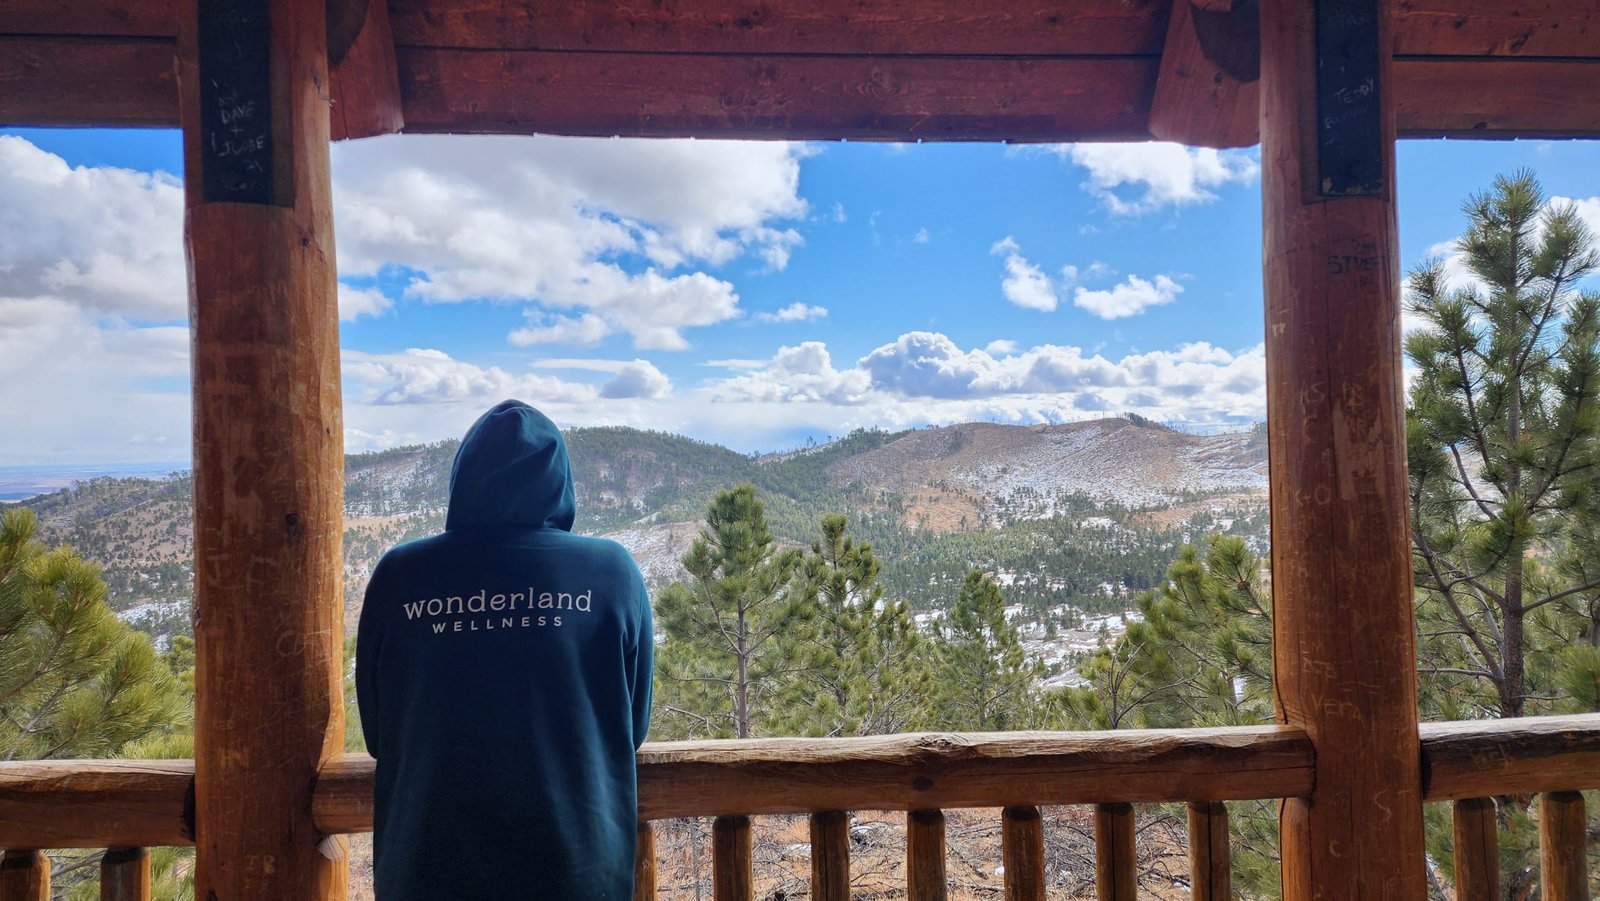 Wonderland Wellness hoodie in the mountain